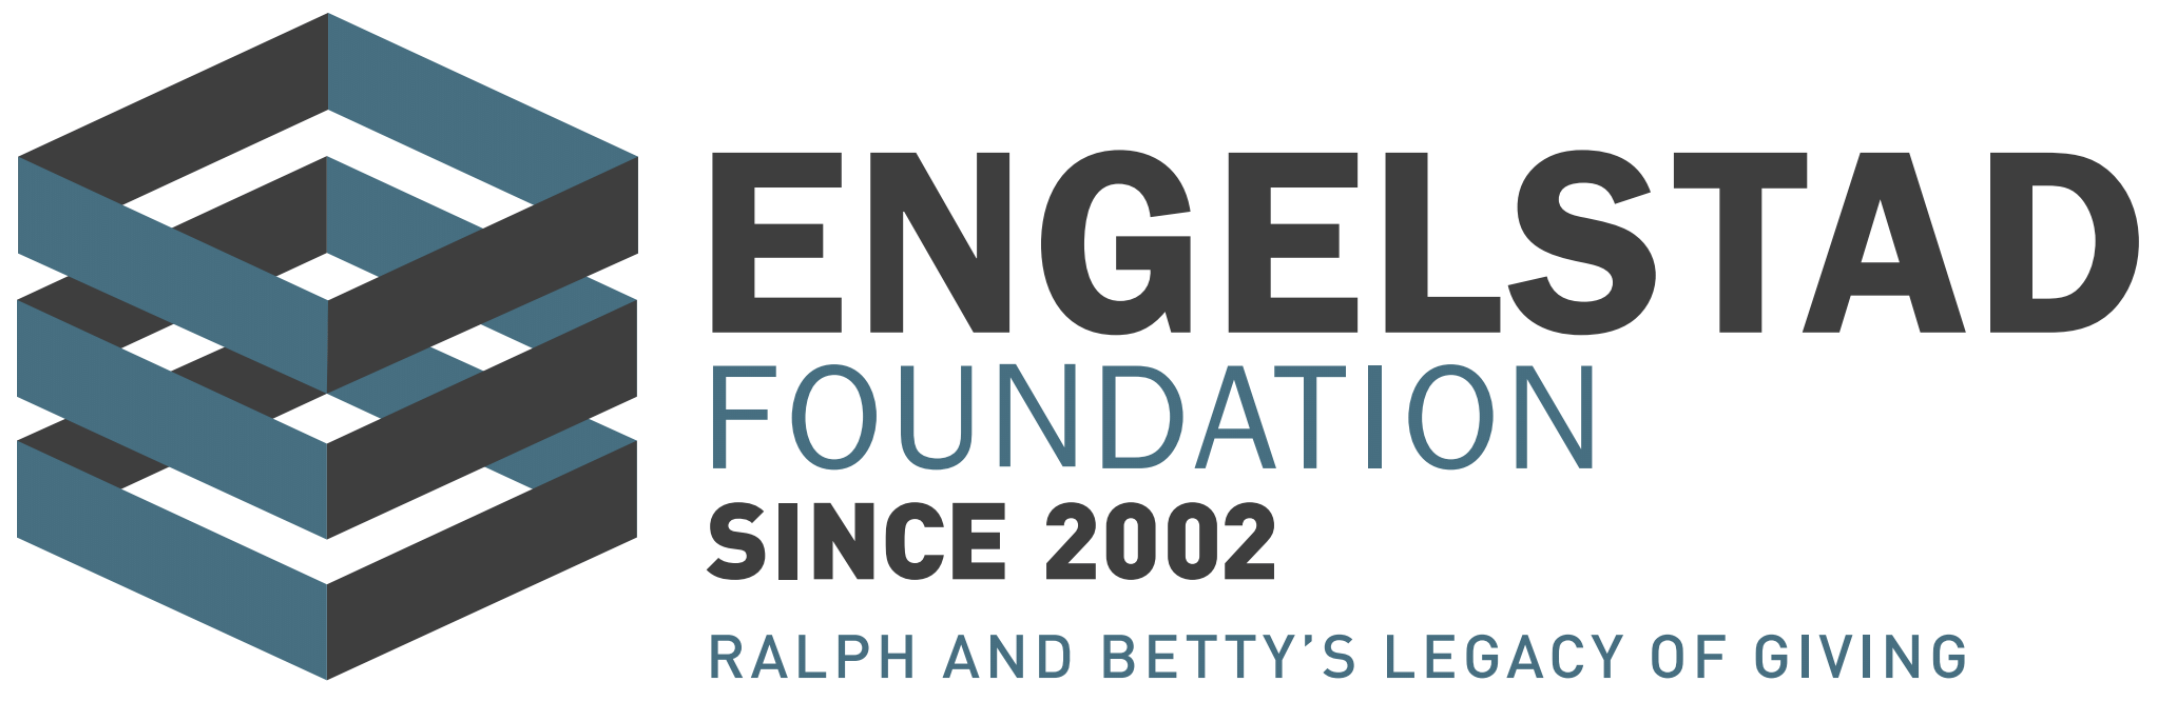 The Engelstad Foundation